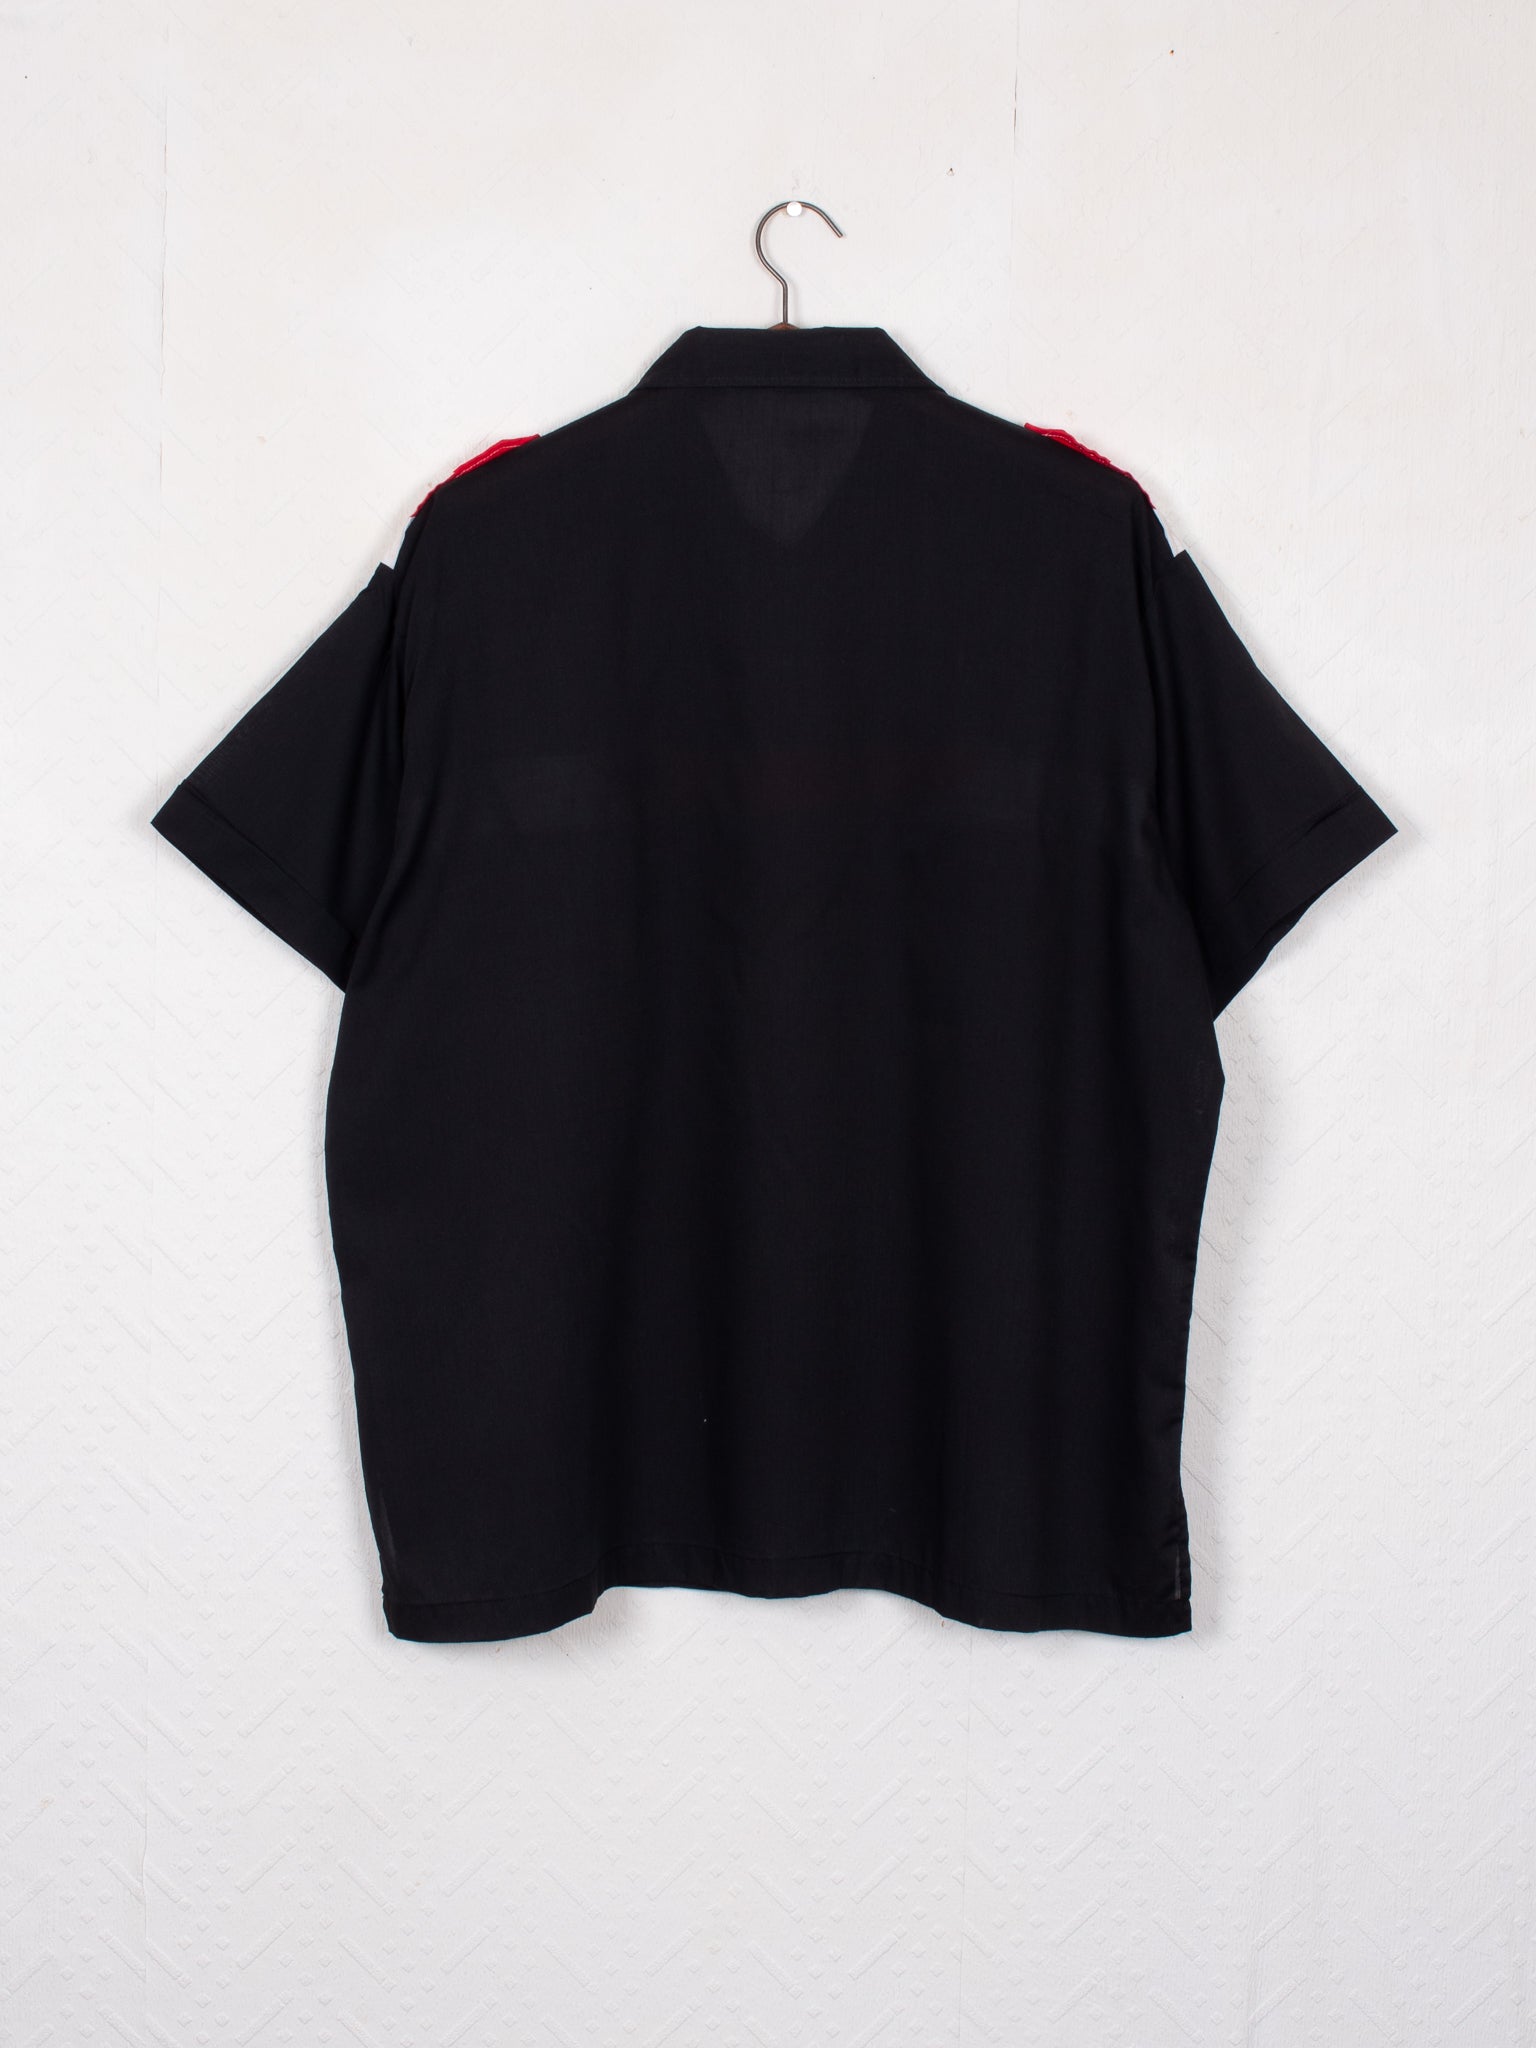 shirts & blouses 70s Bowling Shirt - XL